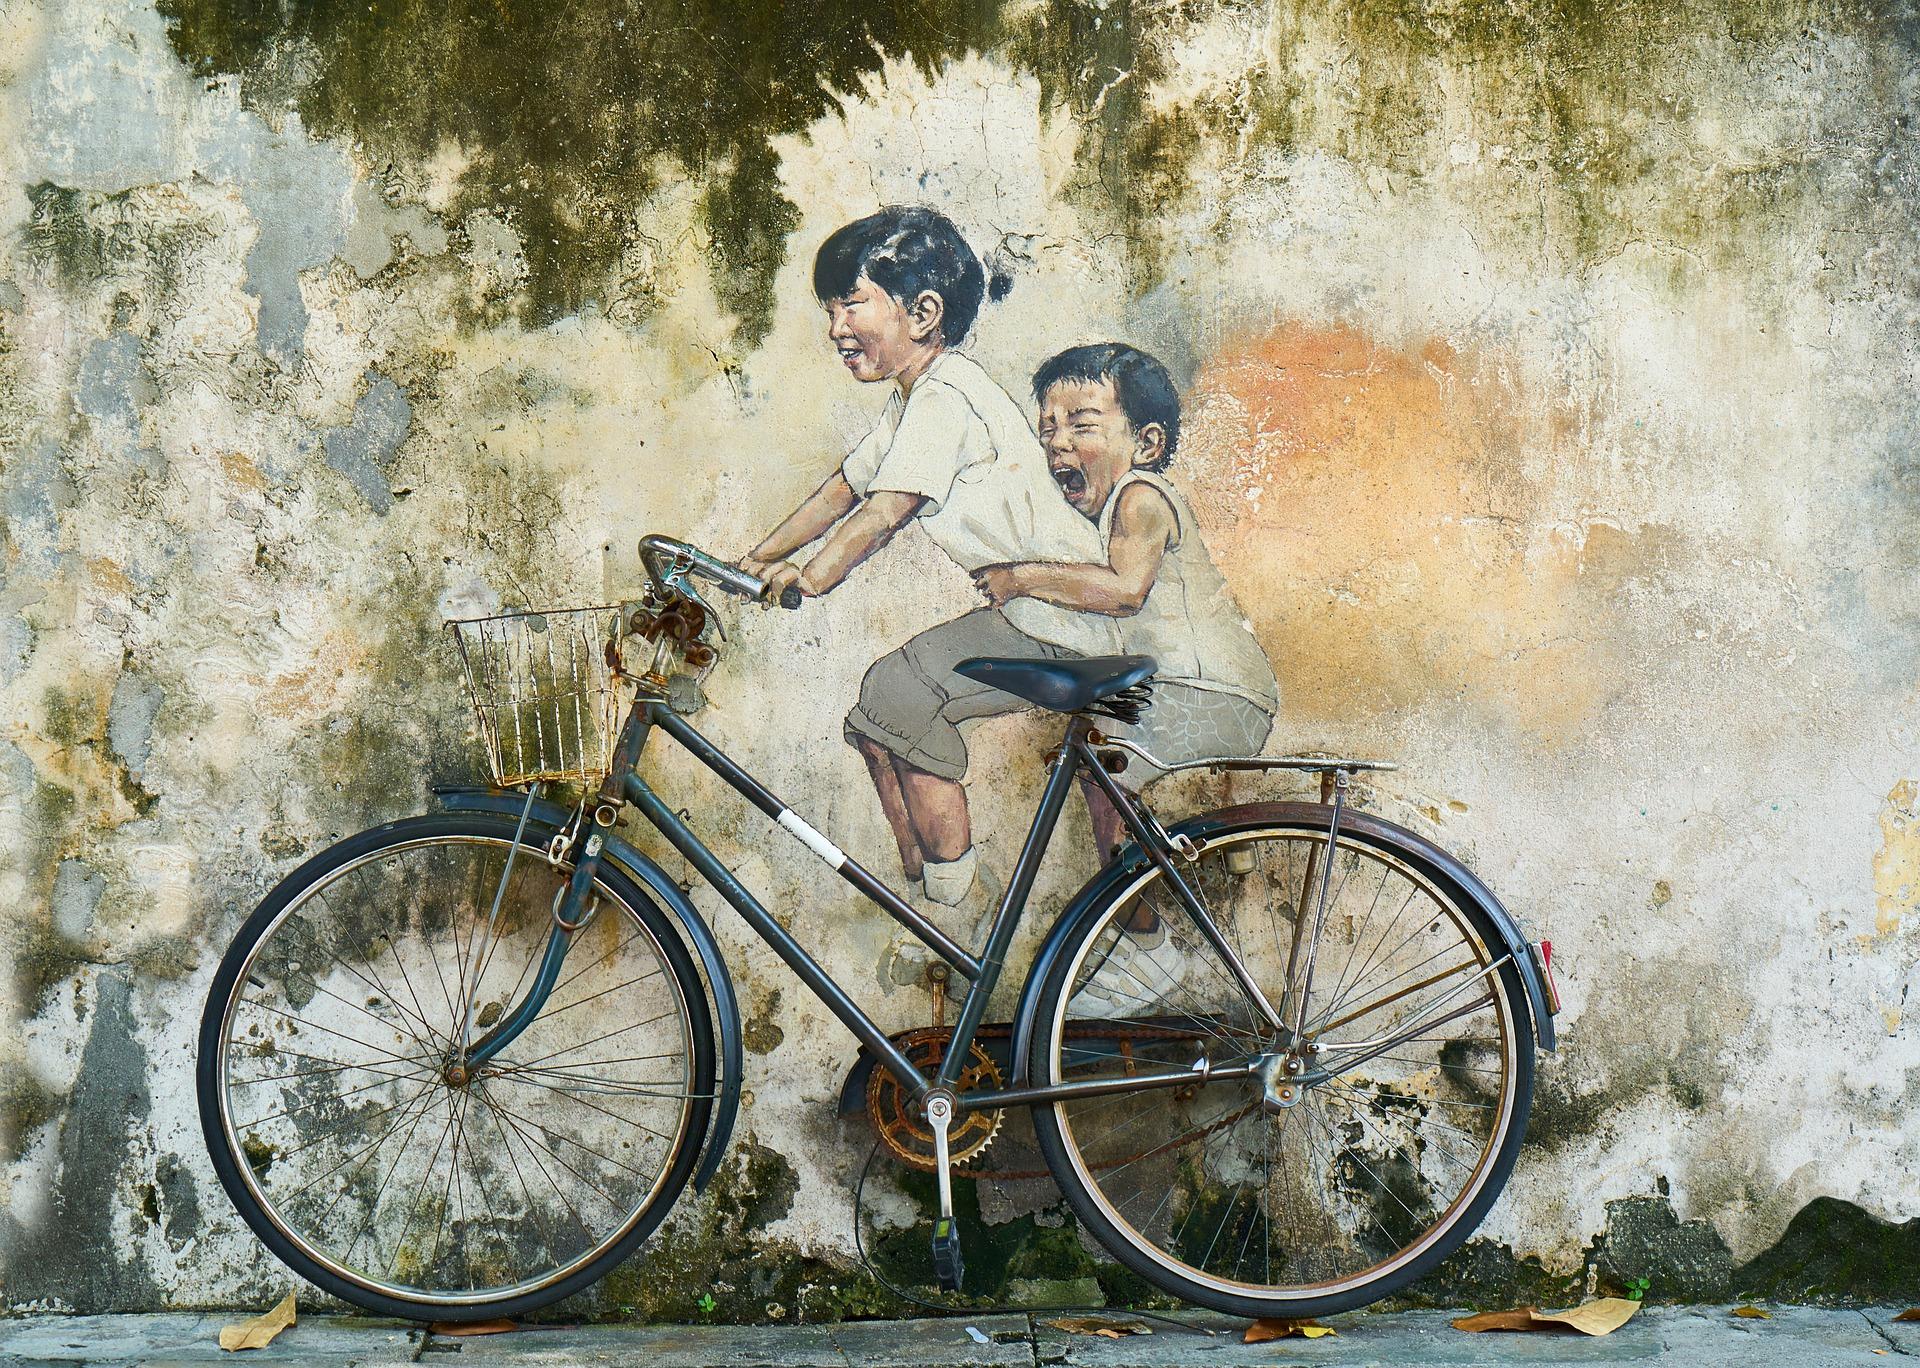 Dos niños en bicicleta